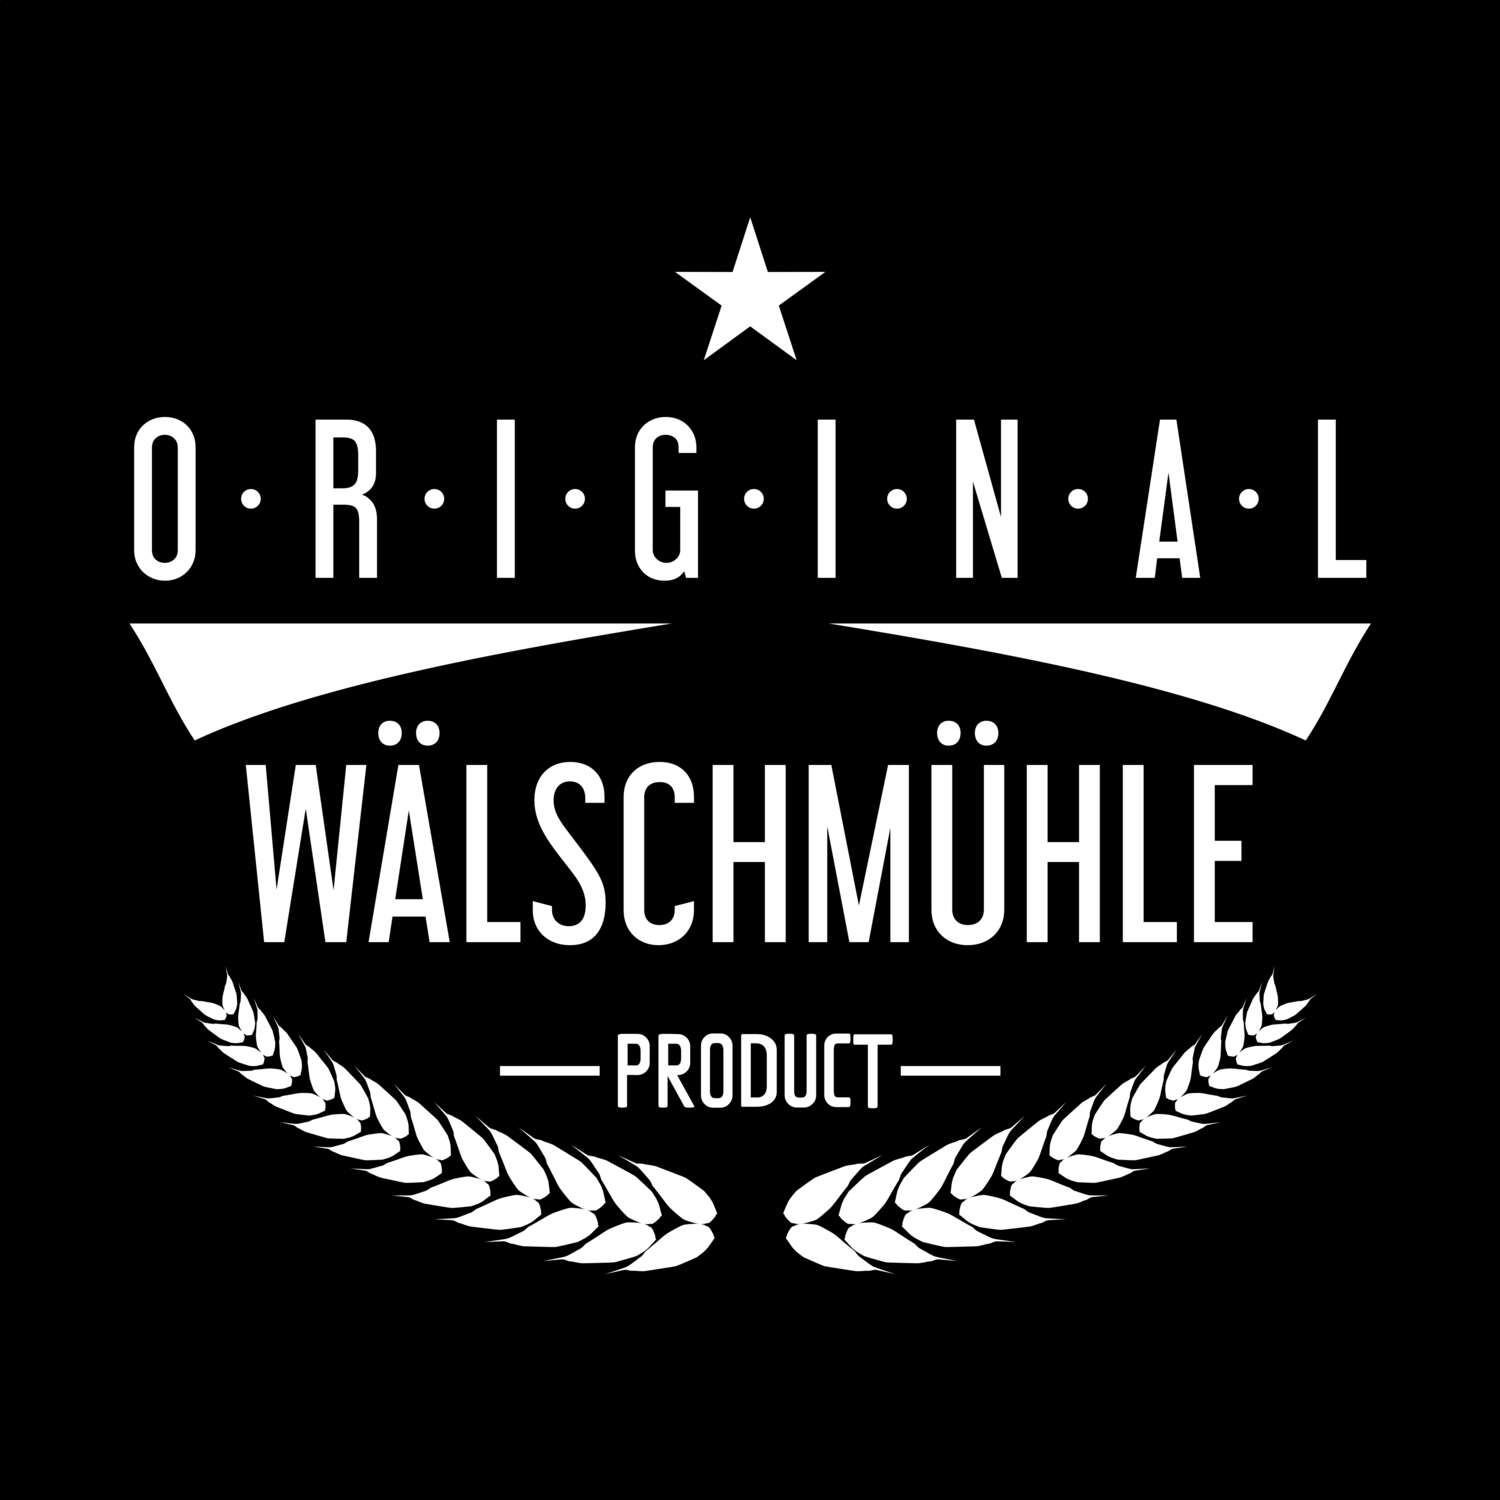 Wälschmühle T-Shirt »Original Product«